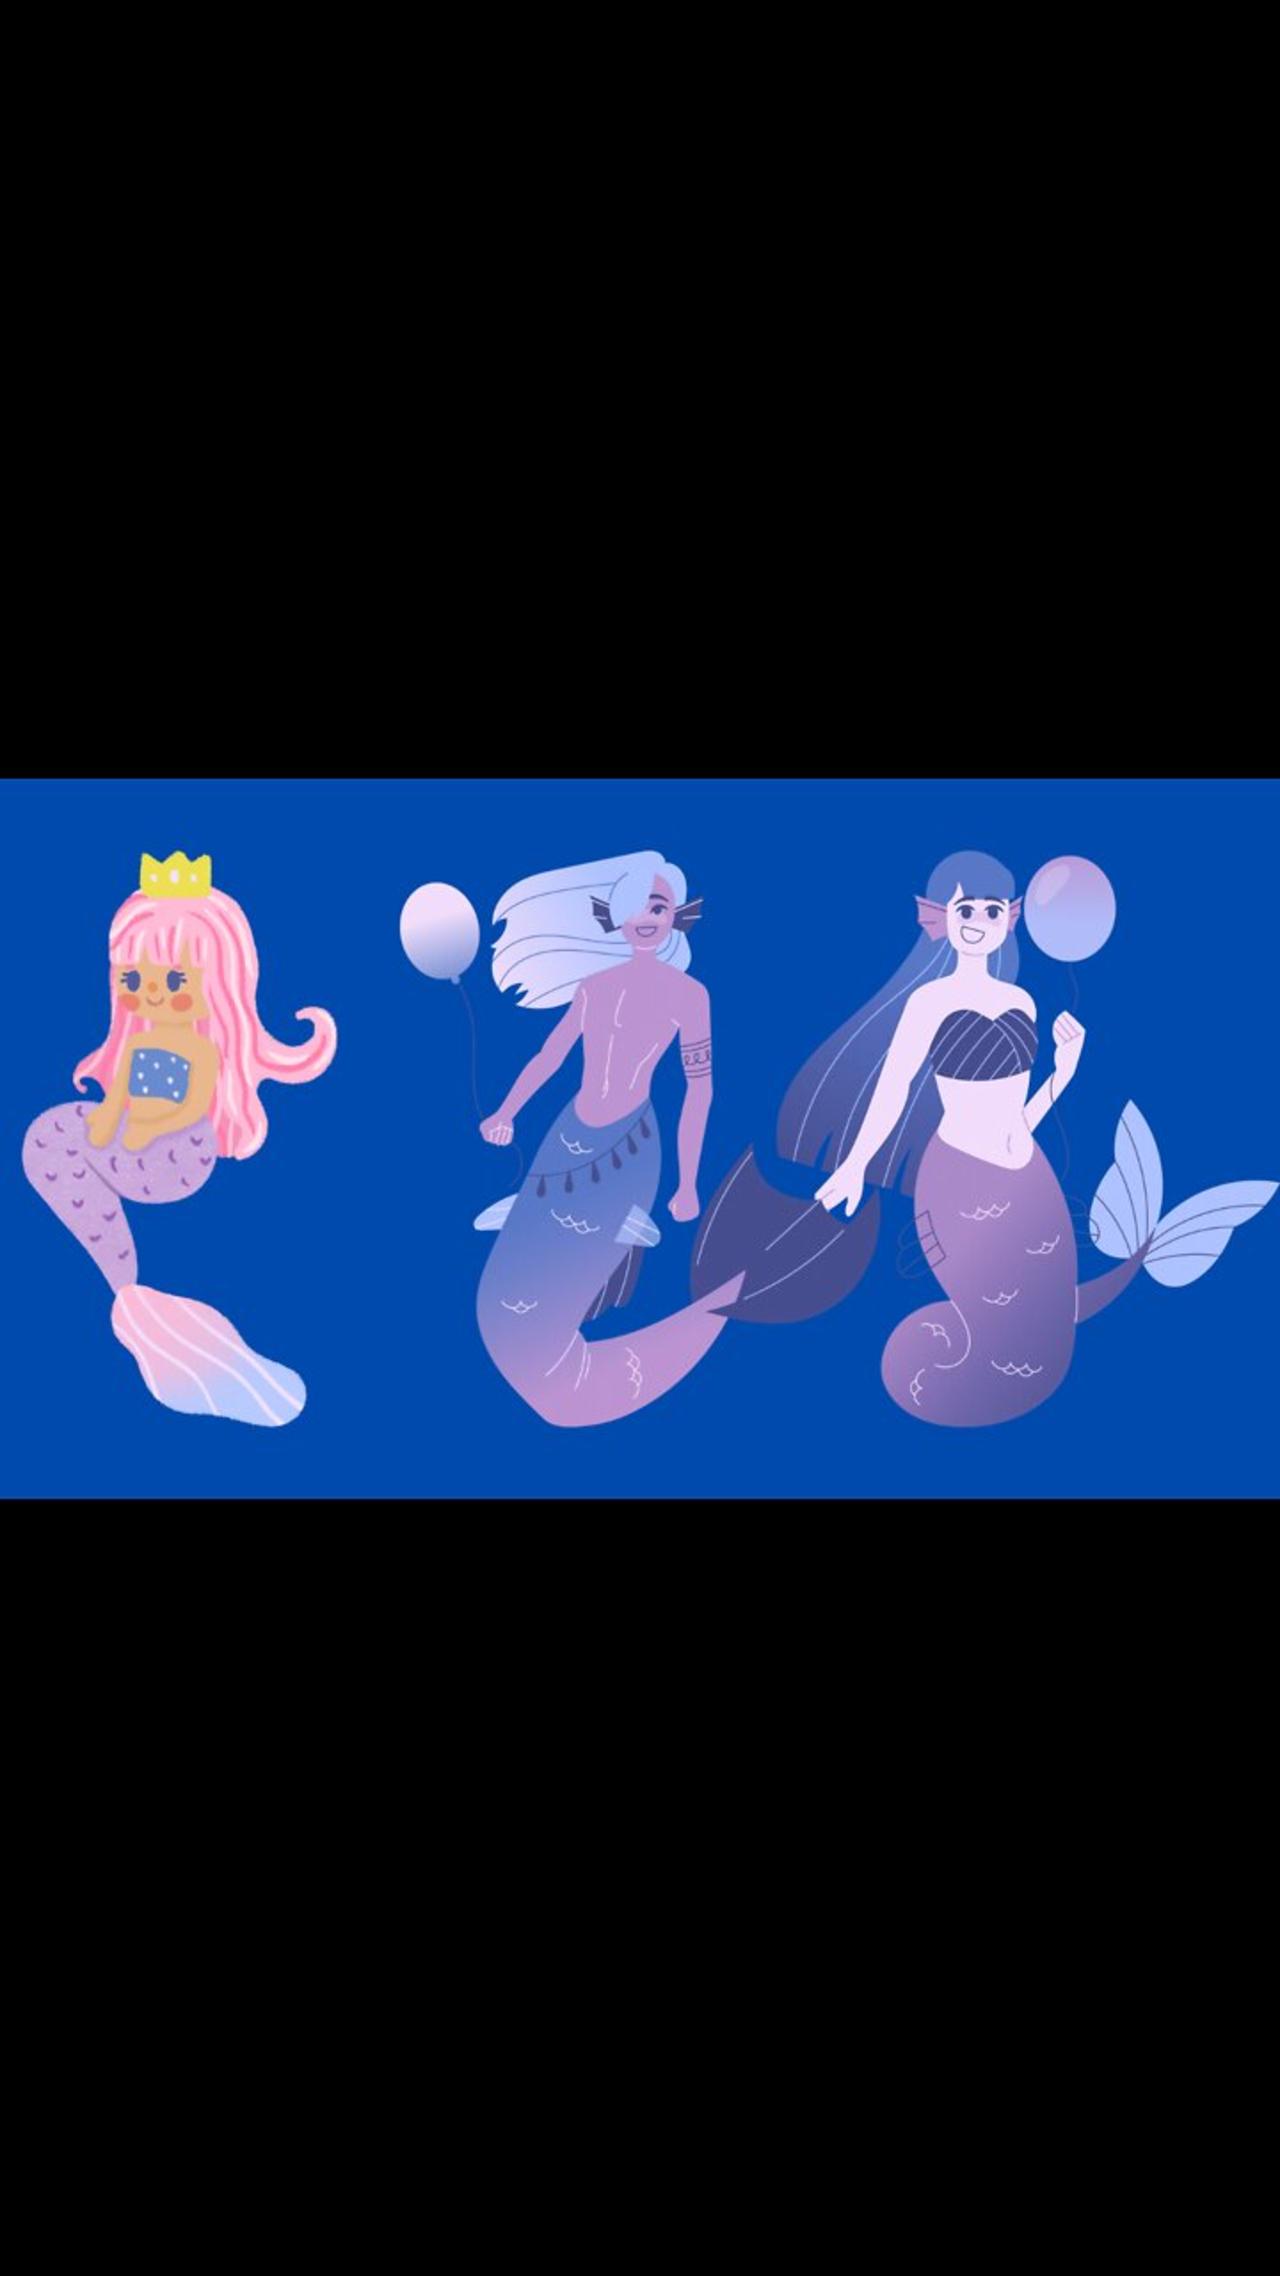 Little mermaid cast video, the little mermaid, Halle bailey, trailer, movie, Disney, live #shots